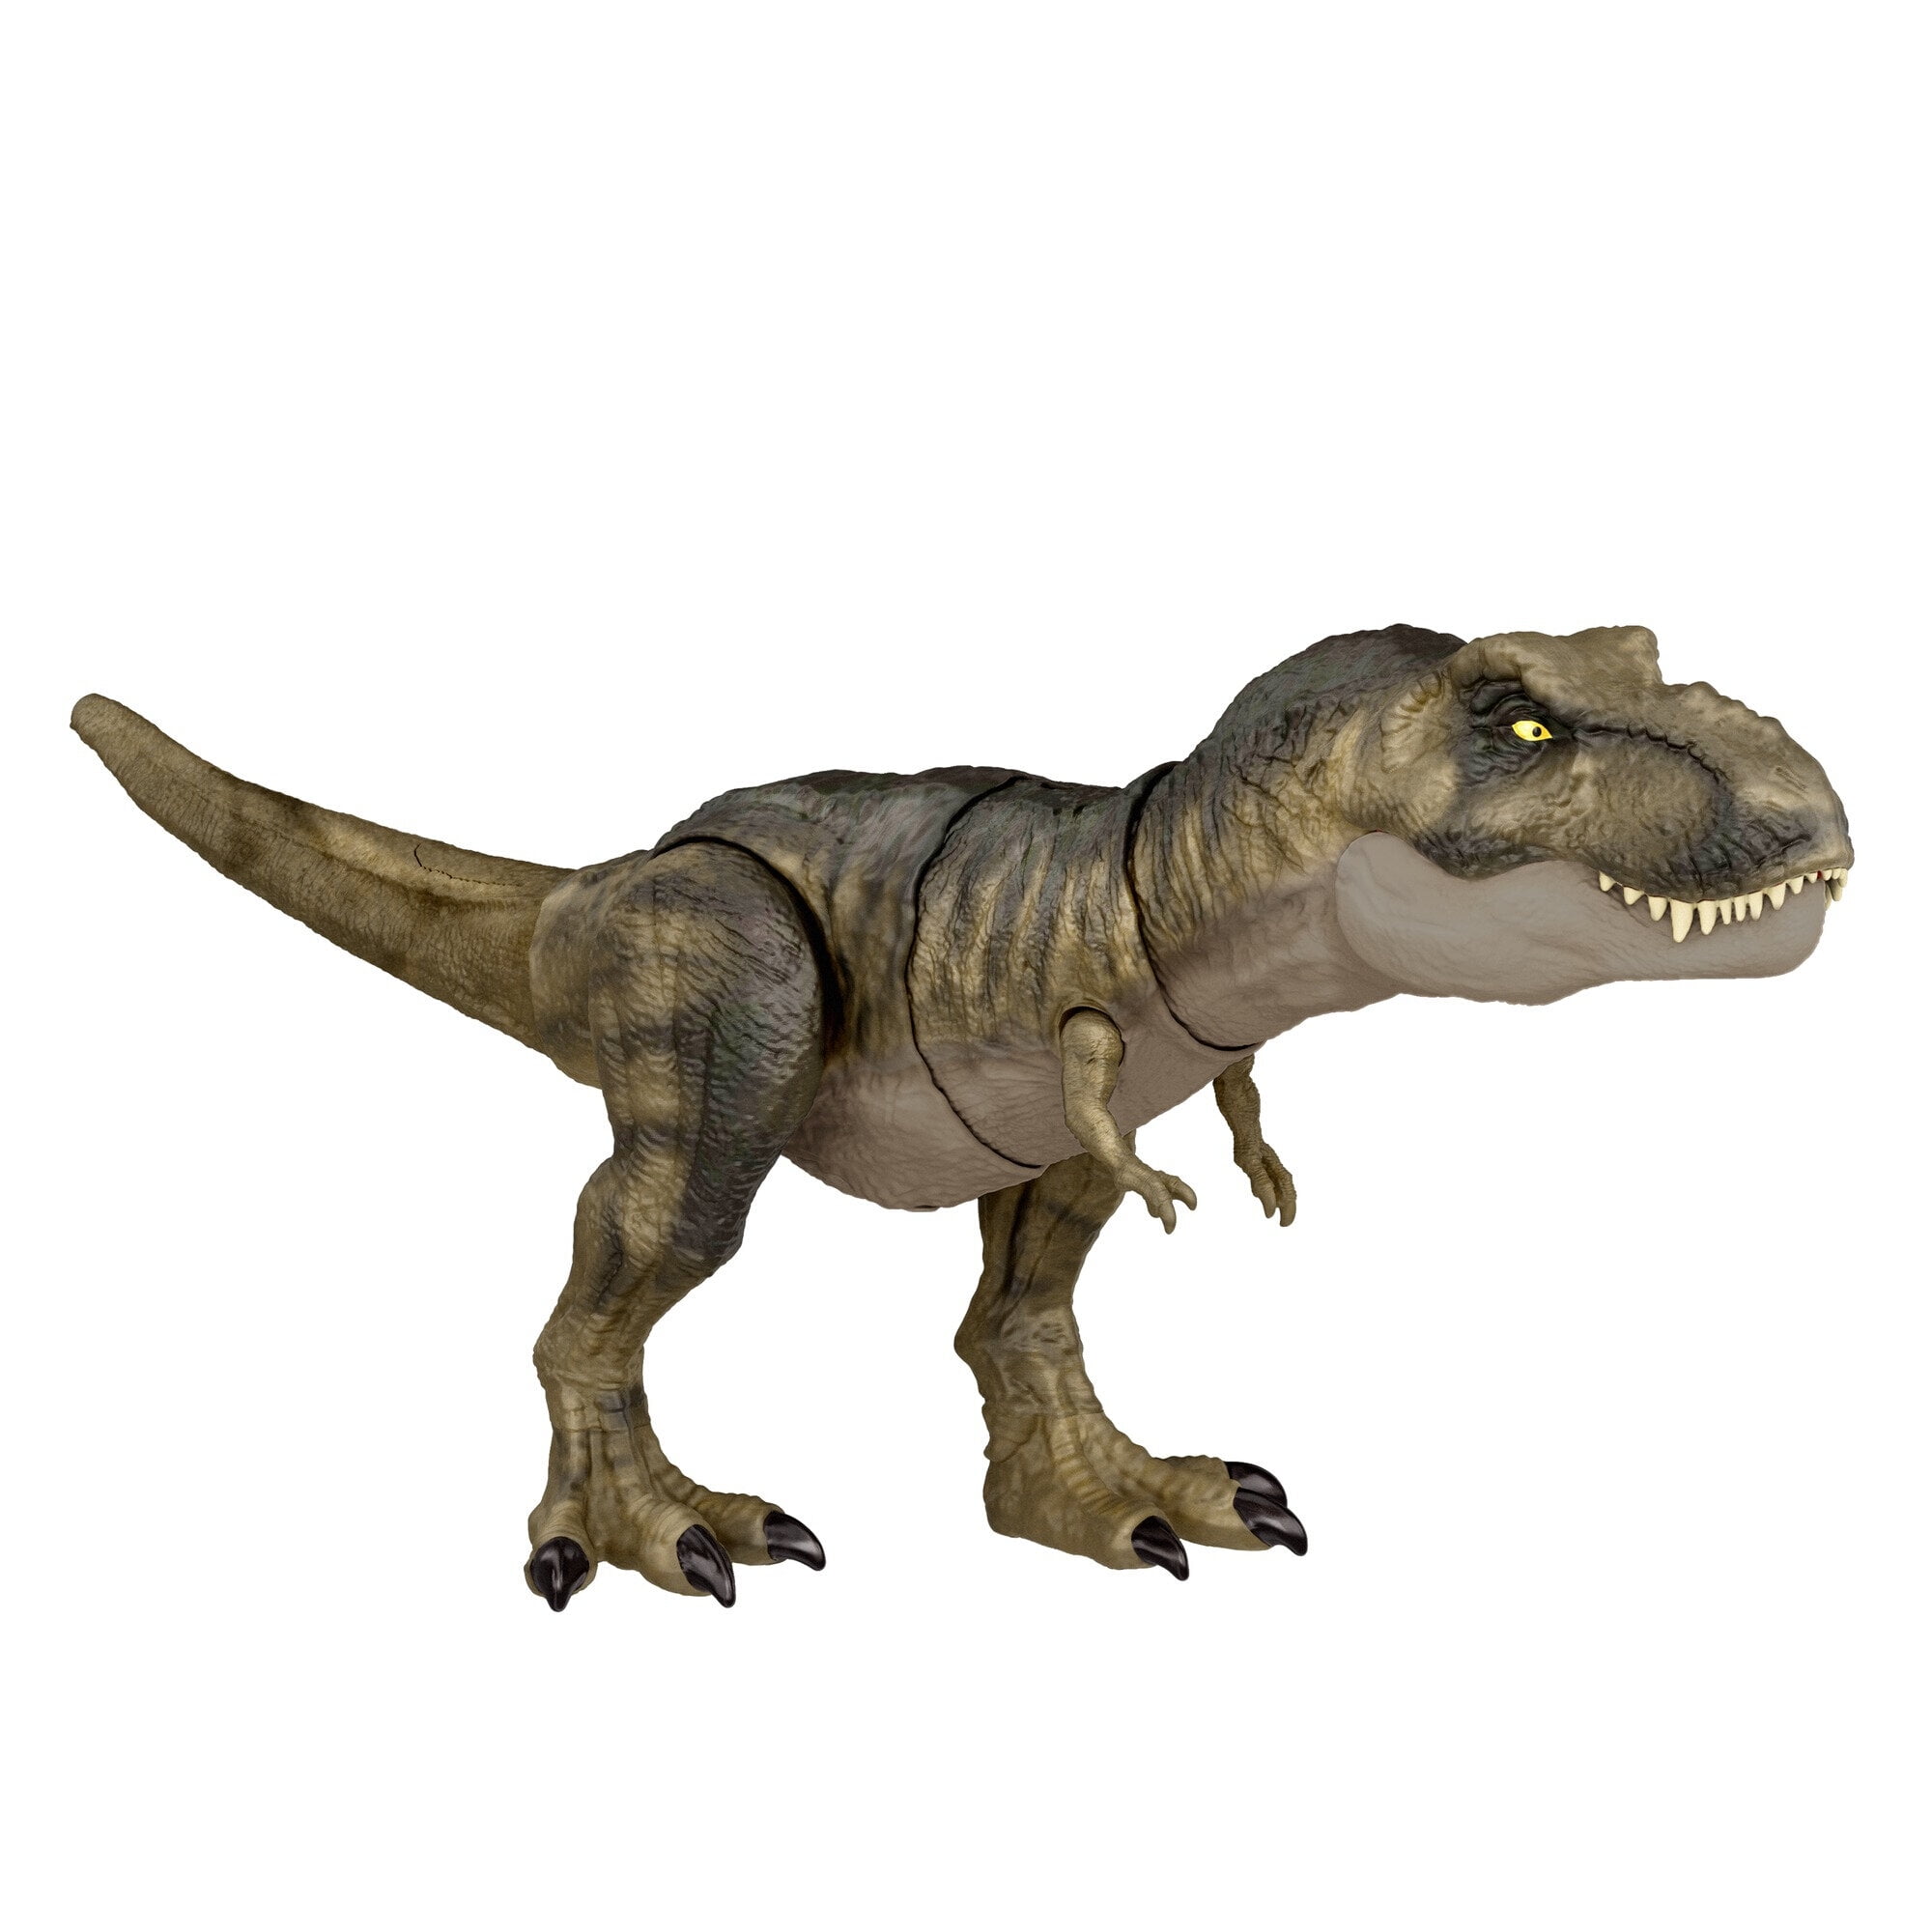 Jurassic World Ceratosaurus Figures Simulation Figurine Toys Model Baryonyx 